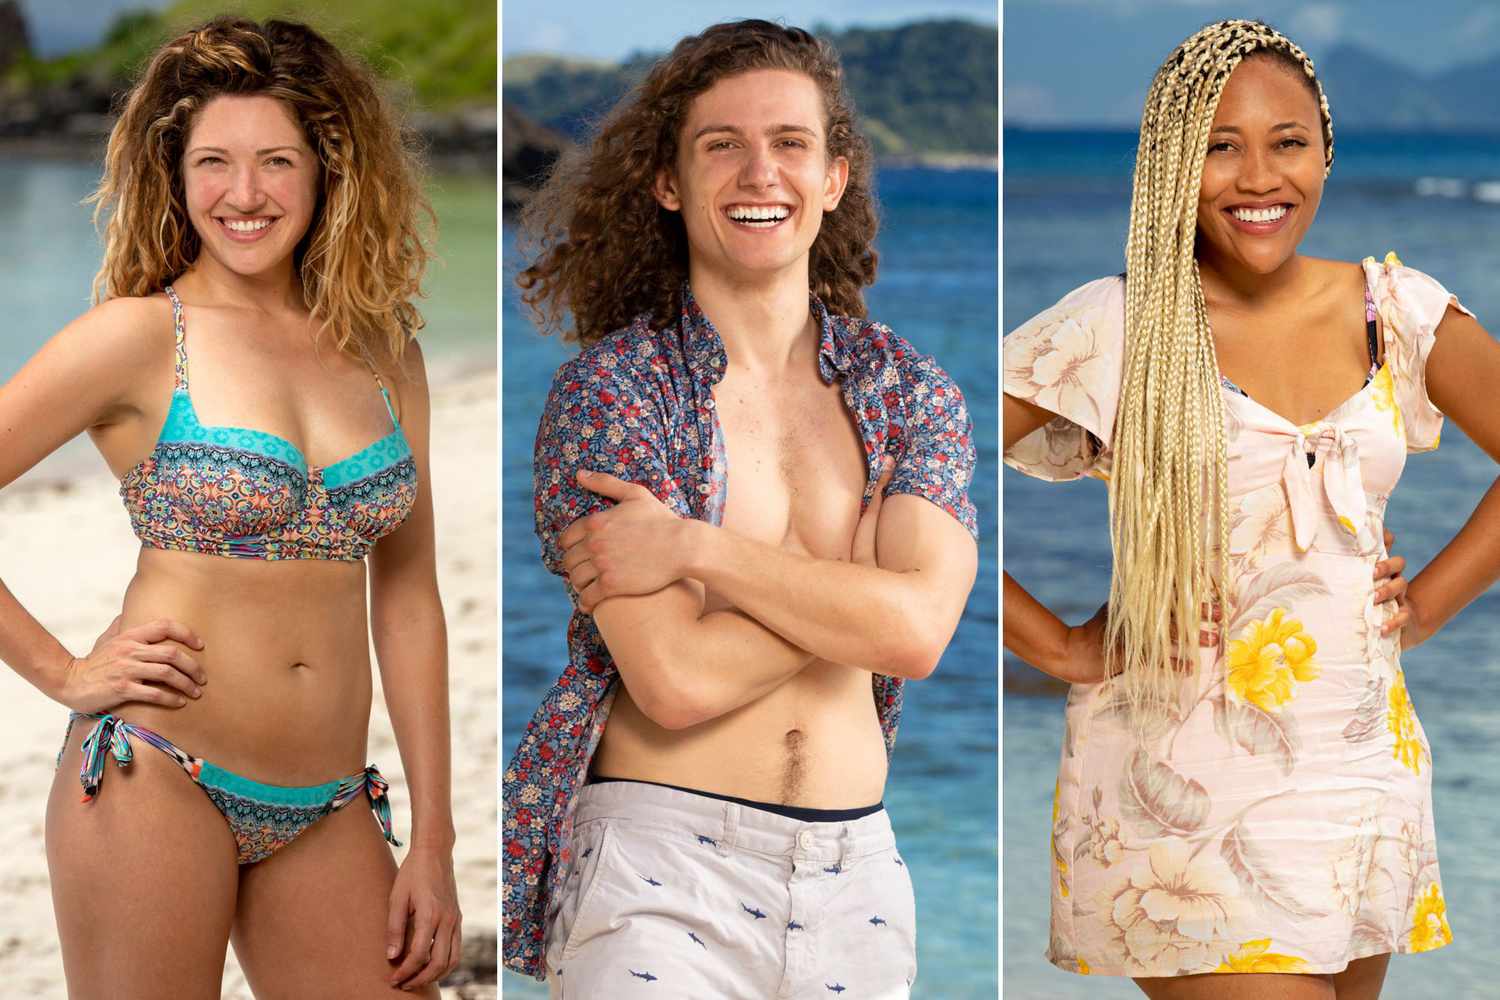 Survivor Island Of The Idols Meet The Season 39 Cast Ew Com. 